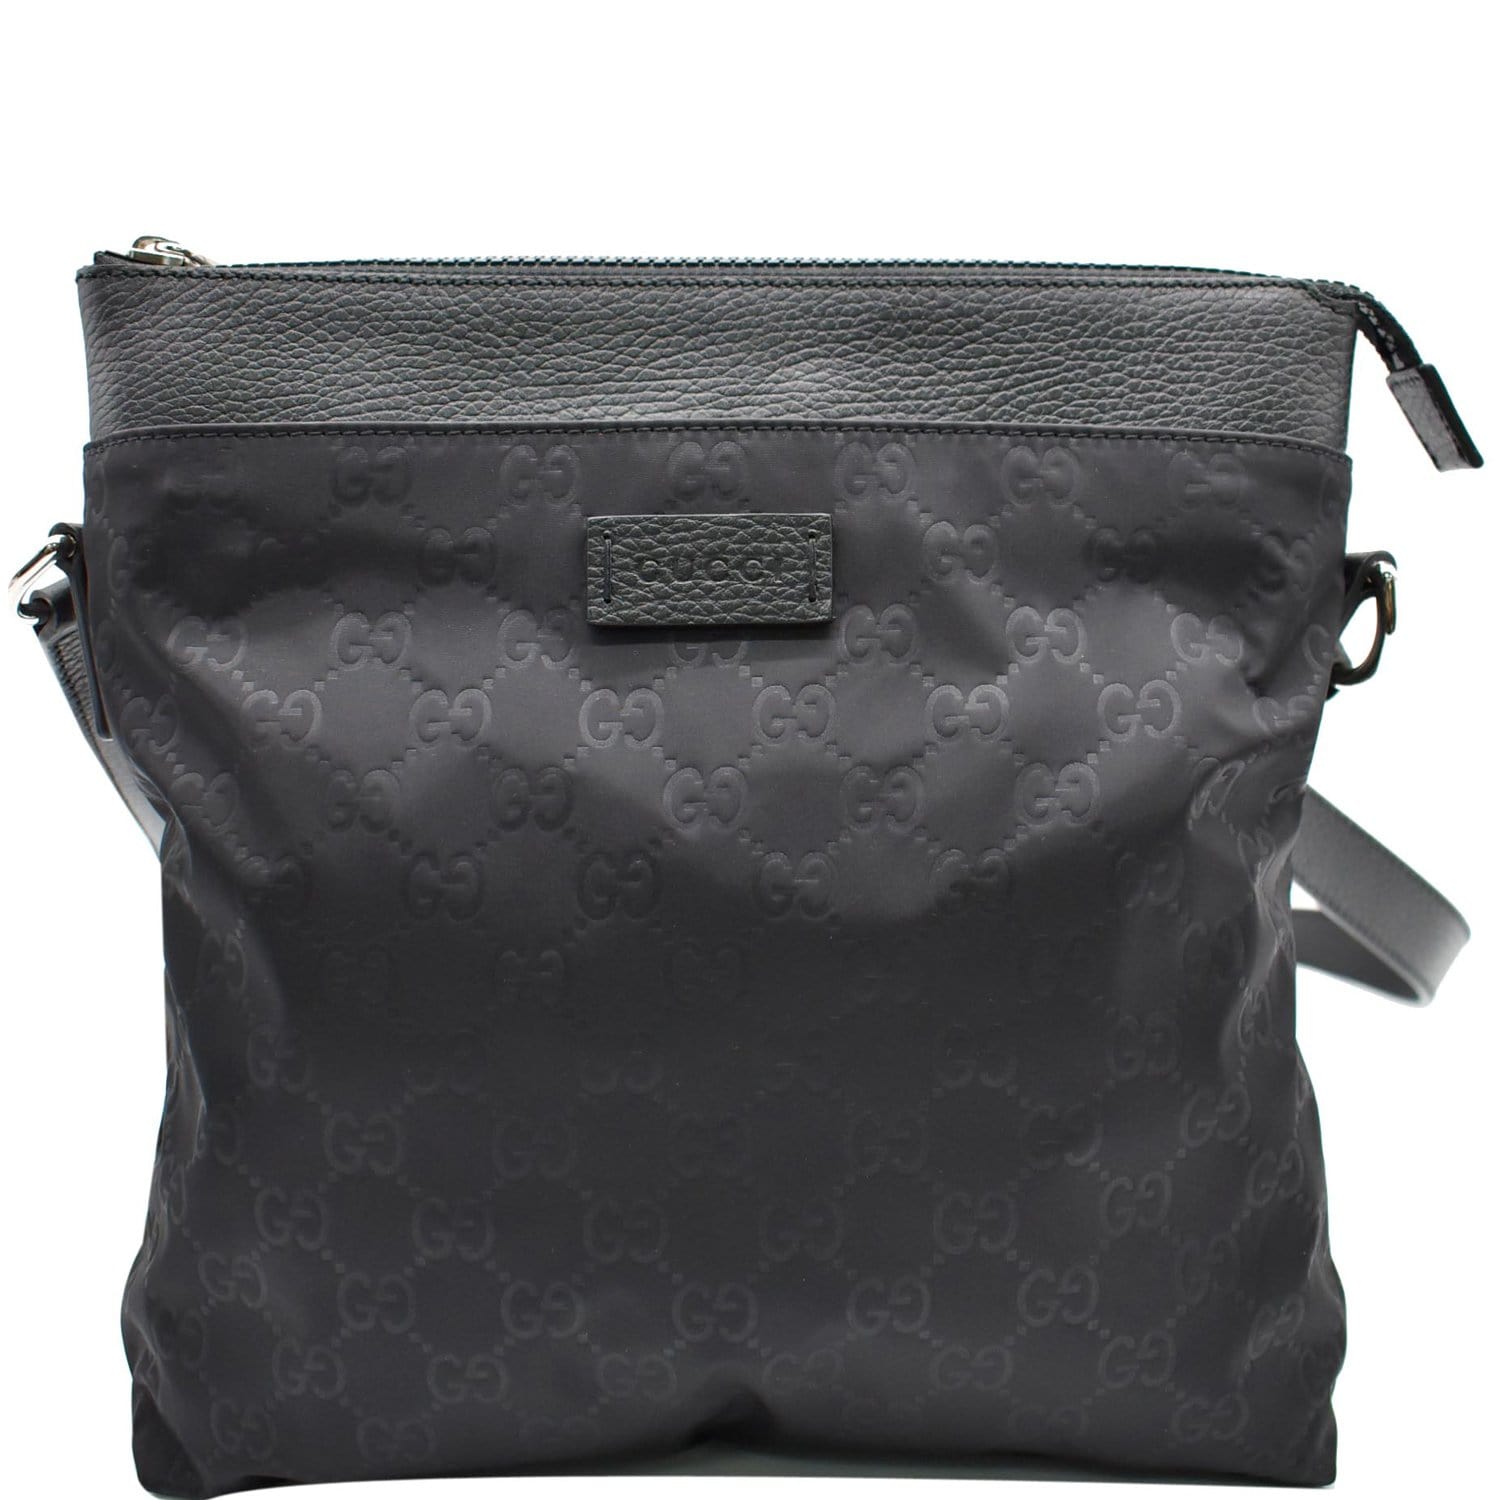 Gucci, Bags, Gucci Shoulder Bag Black With Duster Bag